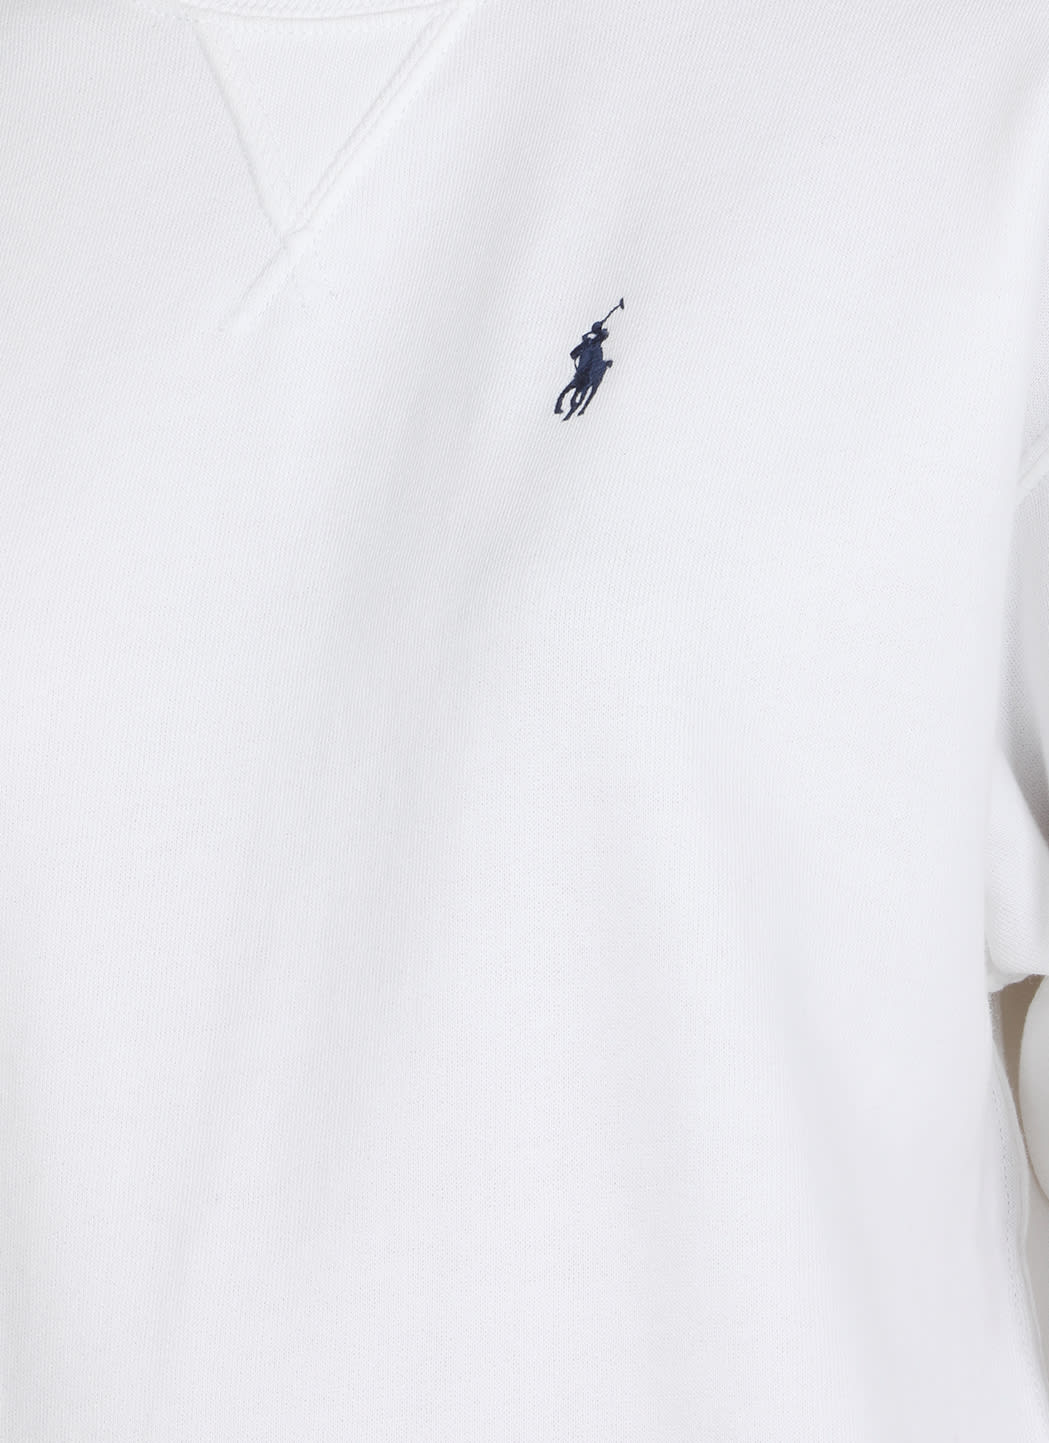 Shop Polo Ralph Lauren Blend Cotton Sweatshirt  In White